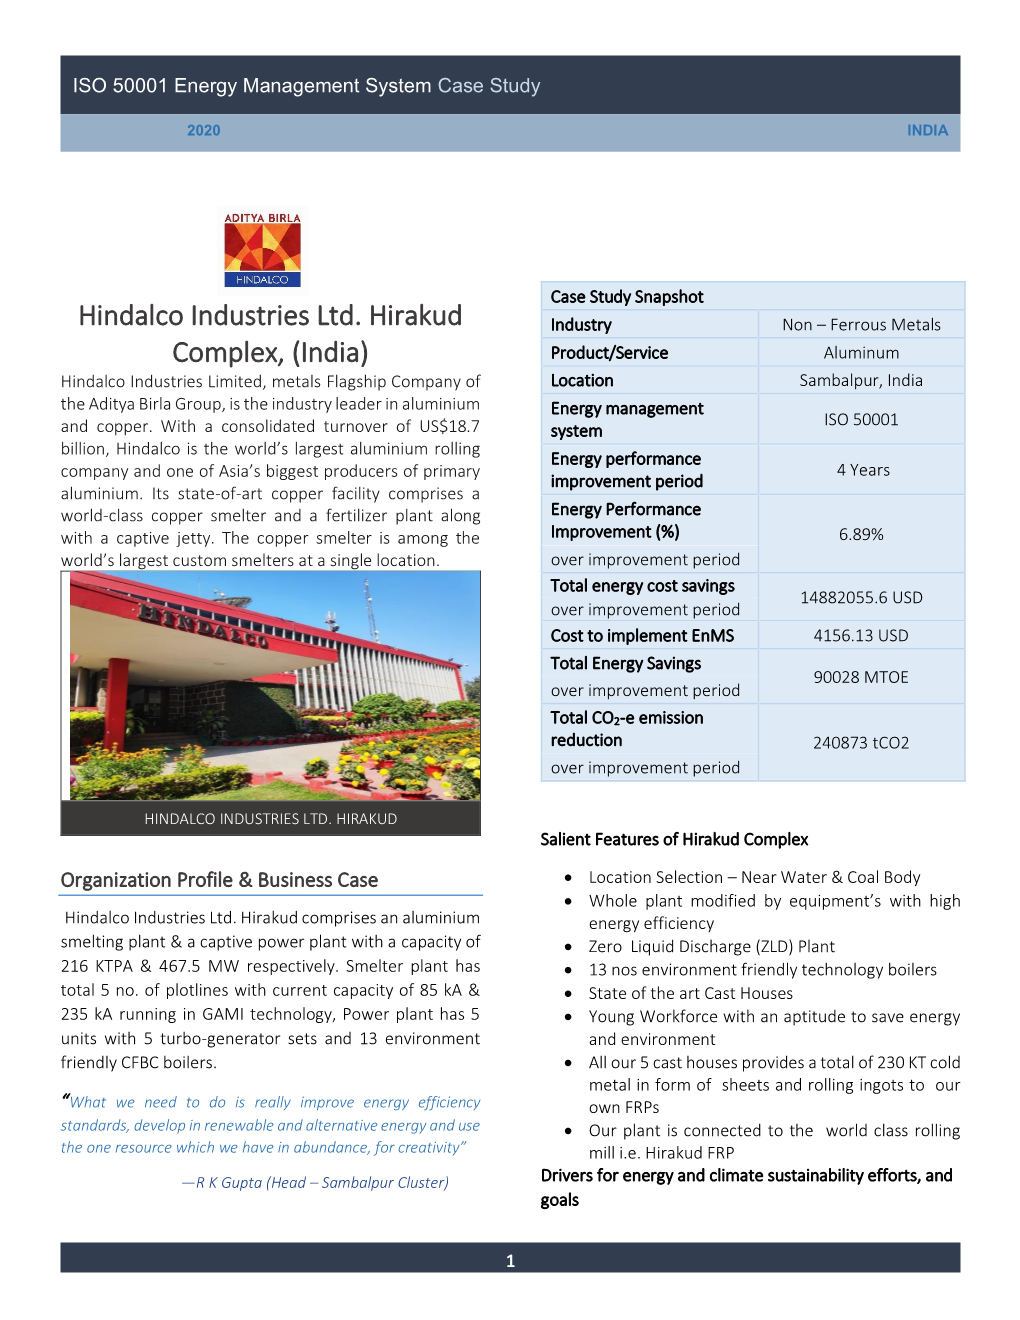 Hindalco Industries Ltd. Hirakud Complex, (India)